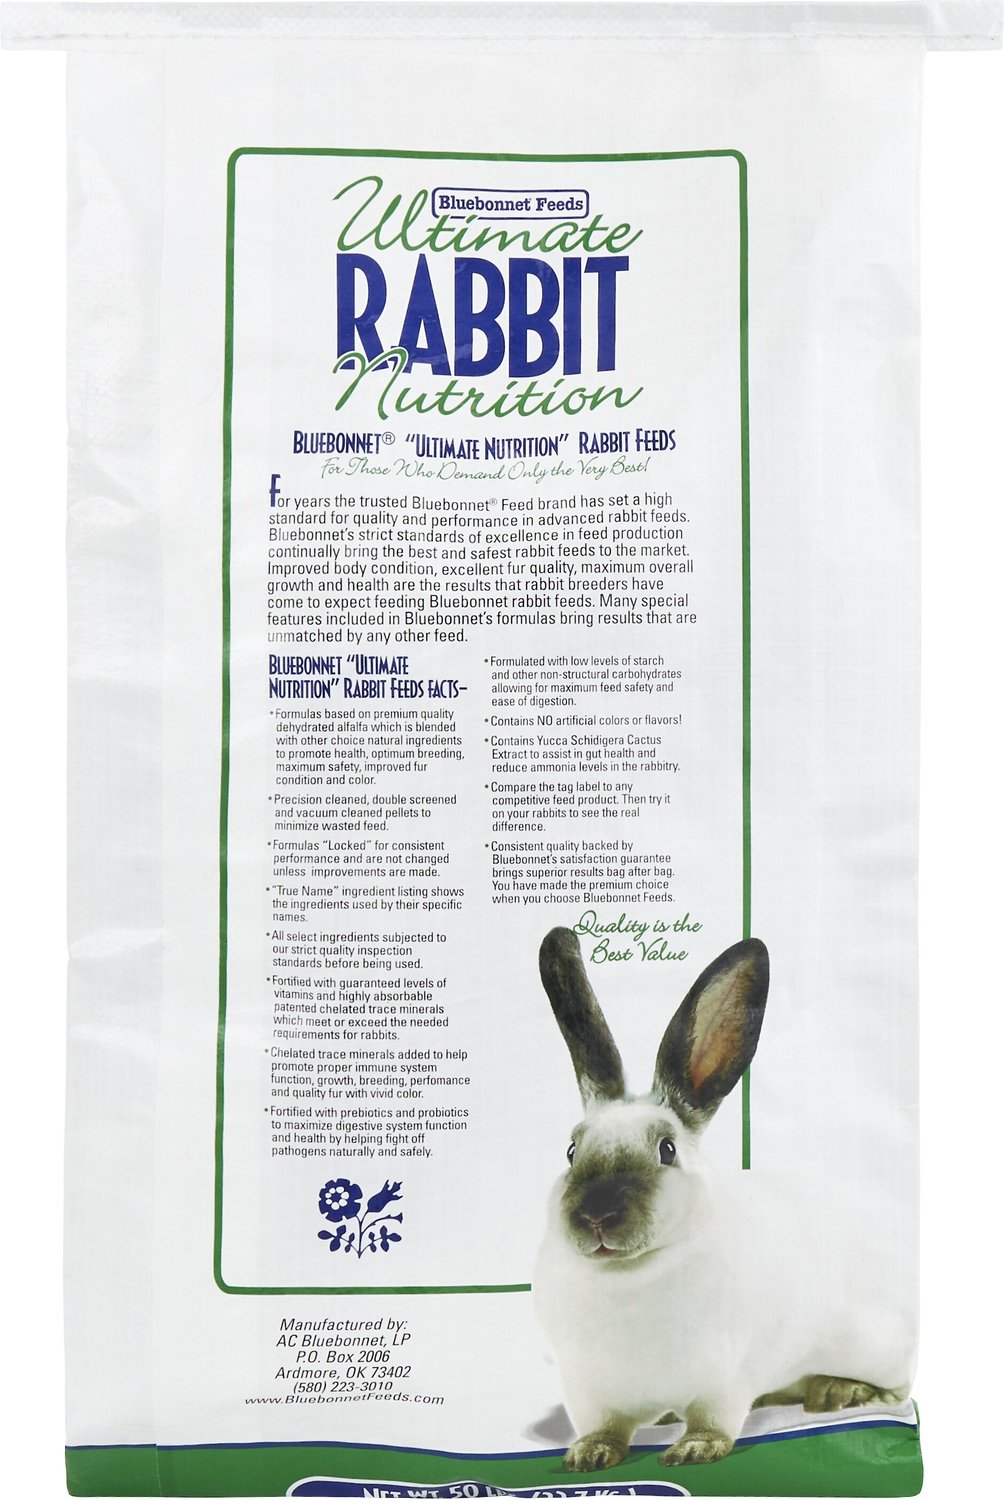 Bluebonnet Feeds Rabbit Booster Rabbit Food, 50-lb bag - Chewy.com